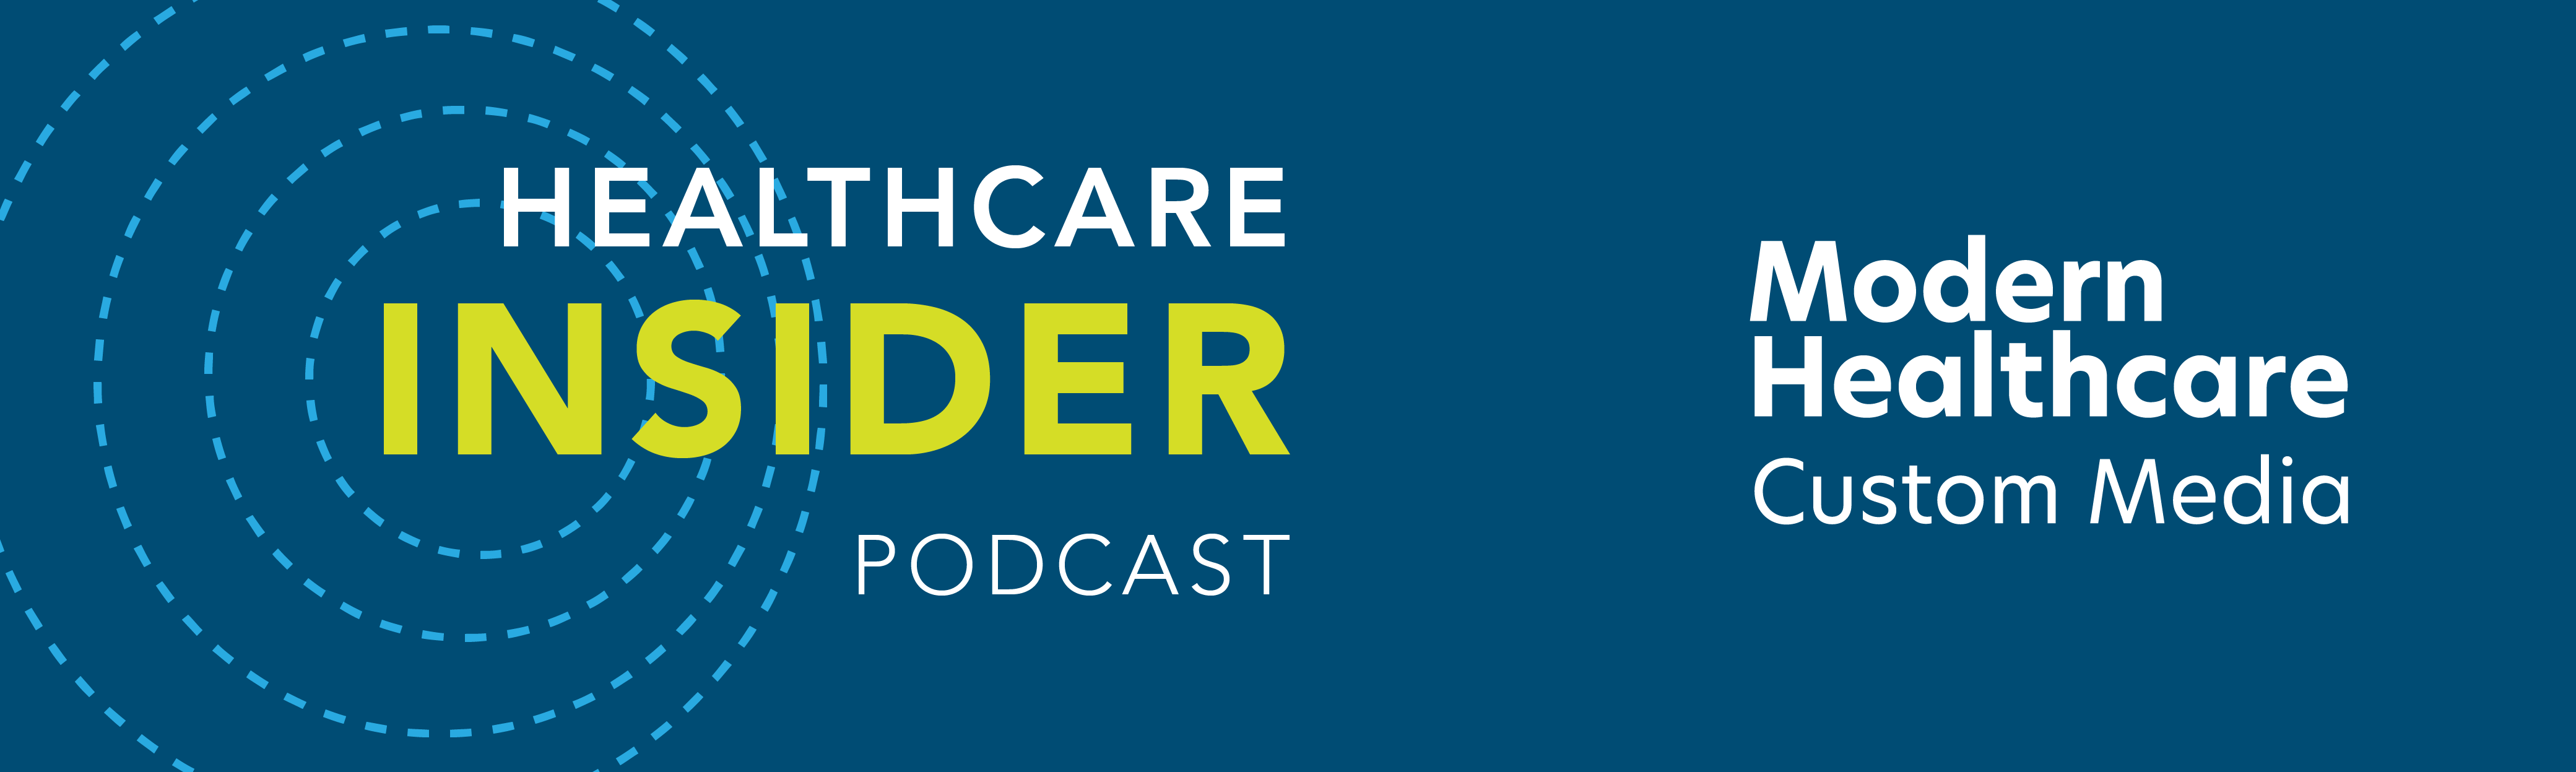 healthcare insider podcast banner image web